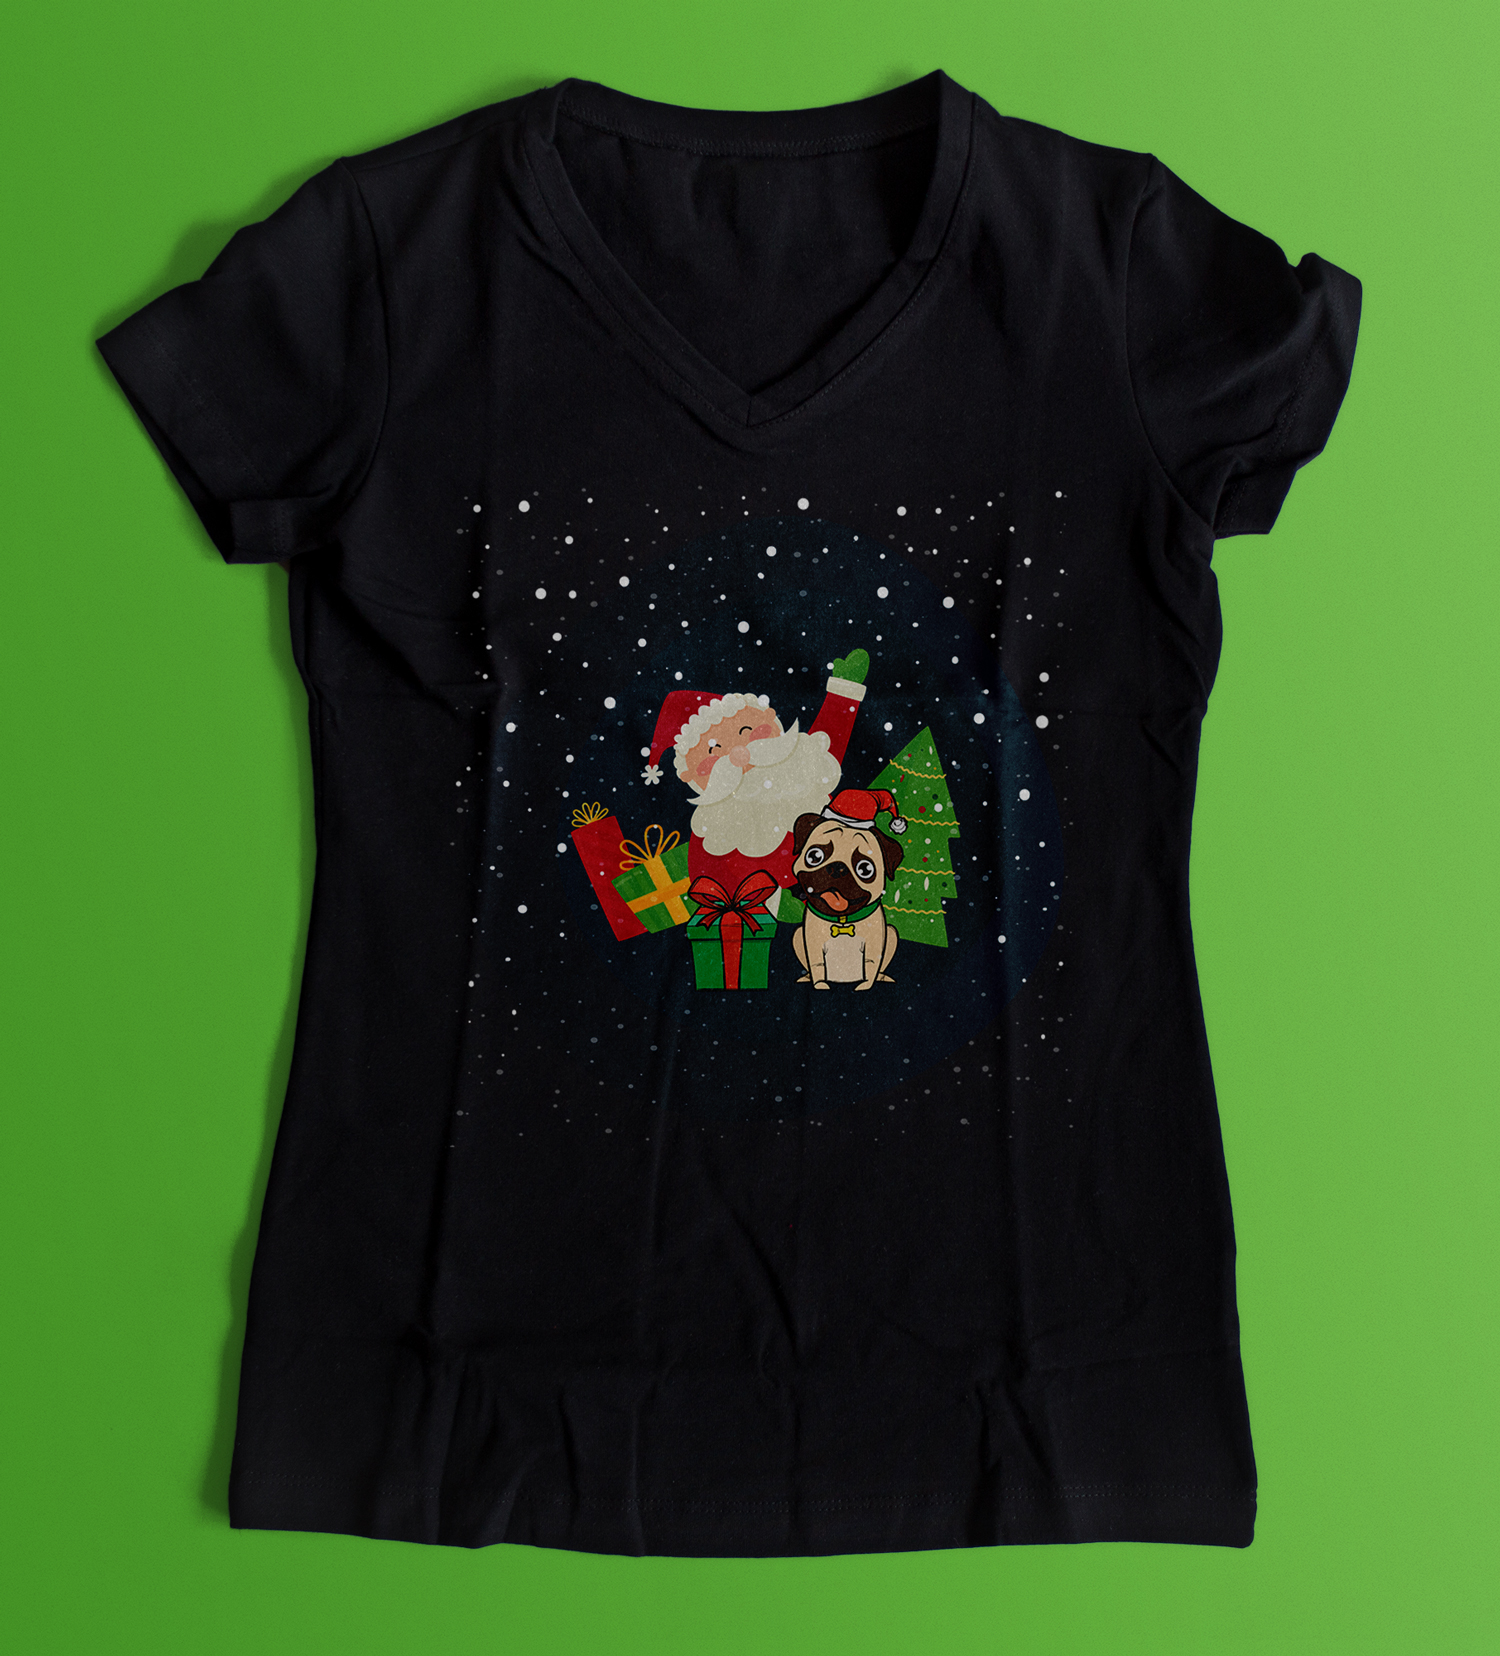 T-Shirt Design for Christmas Niche